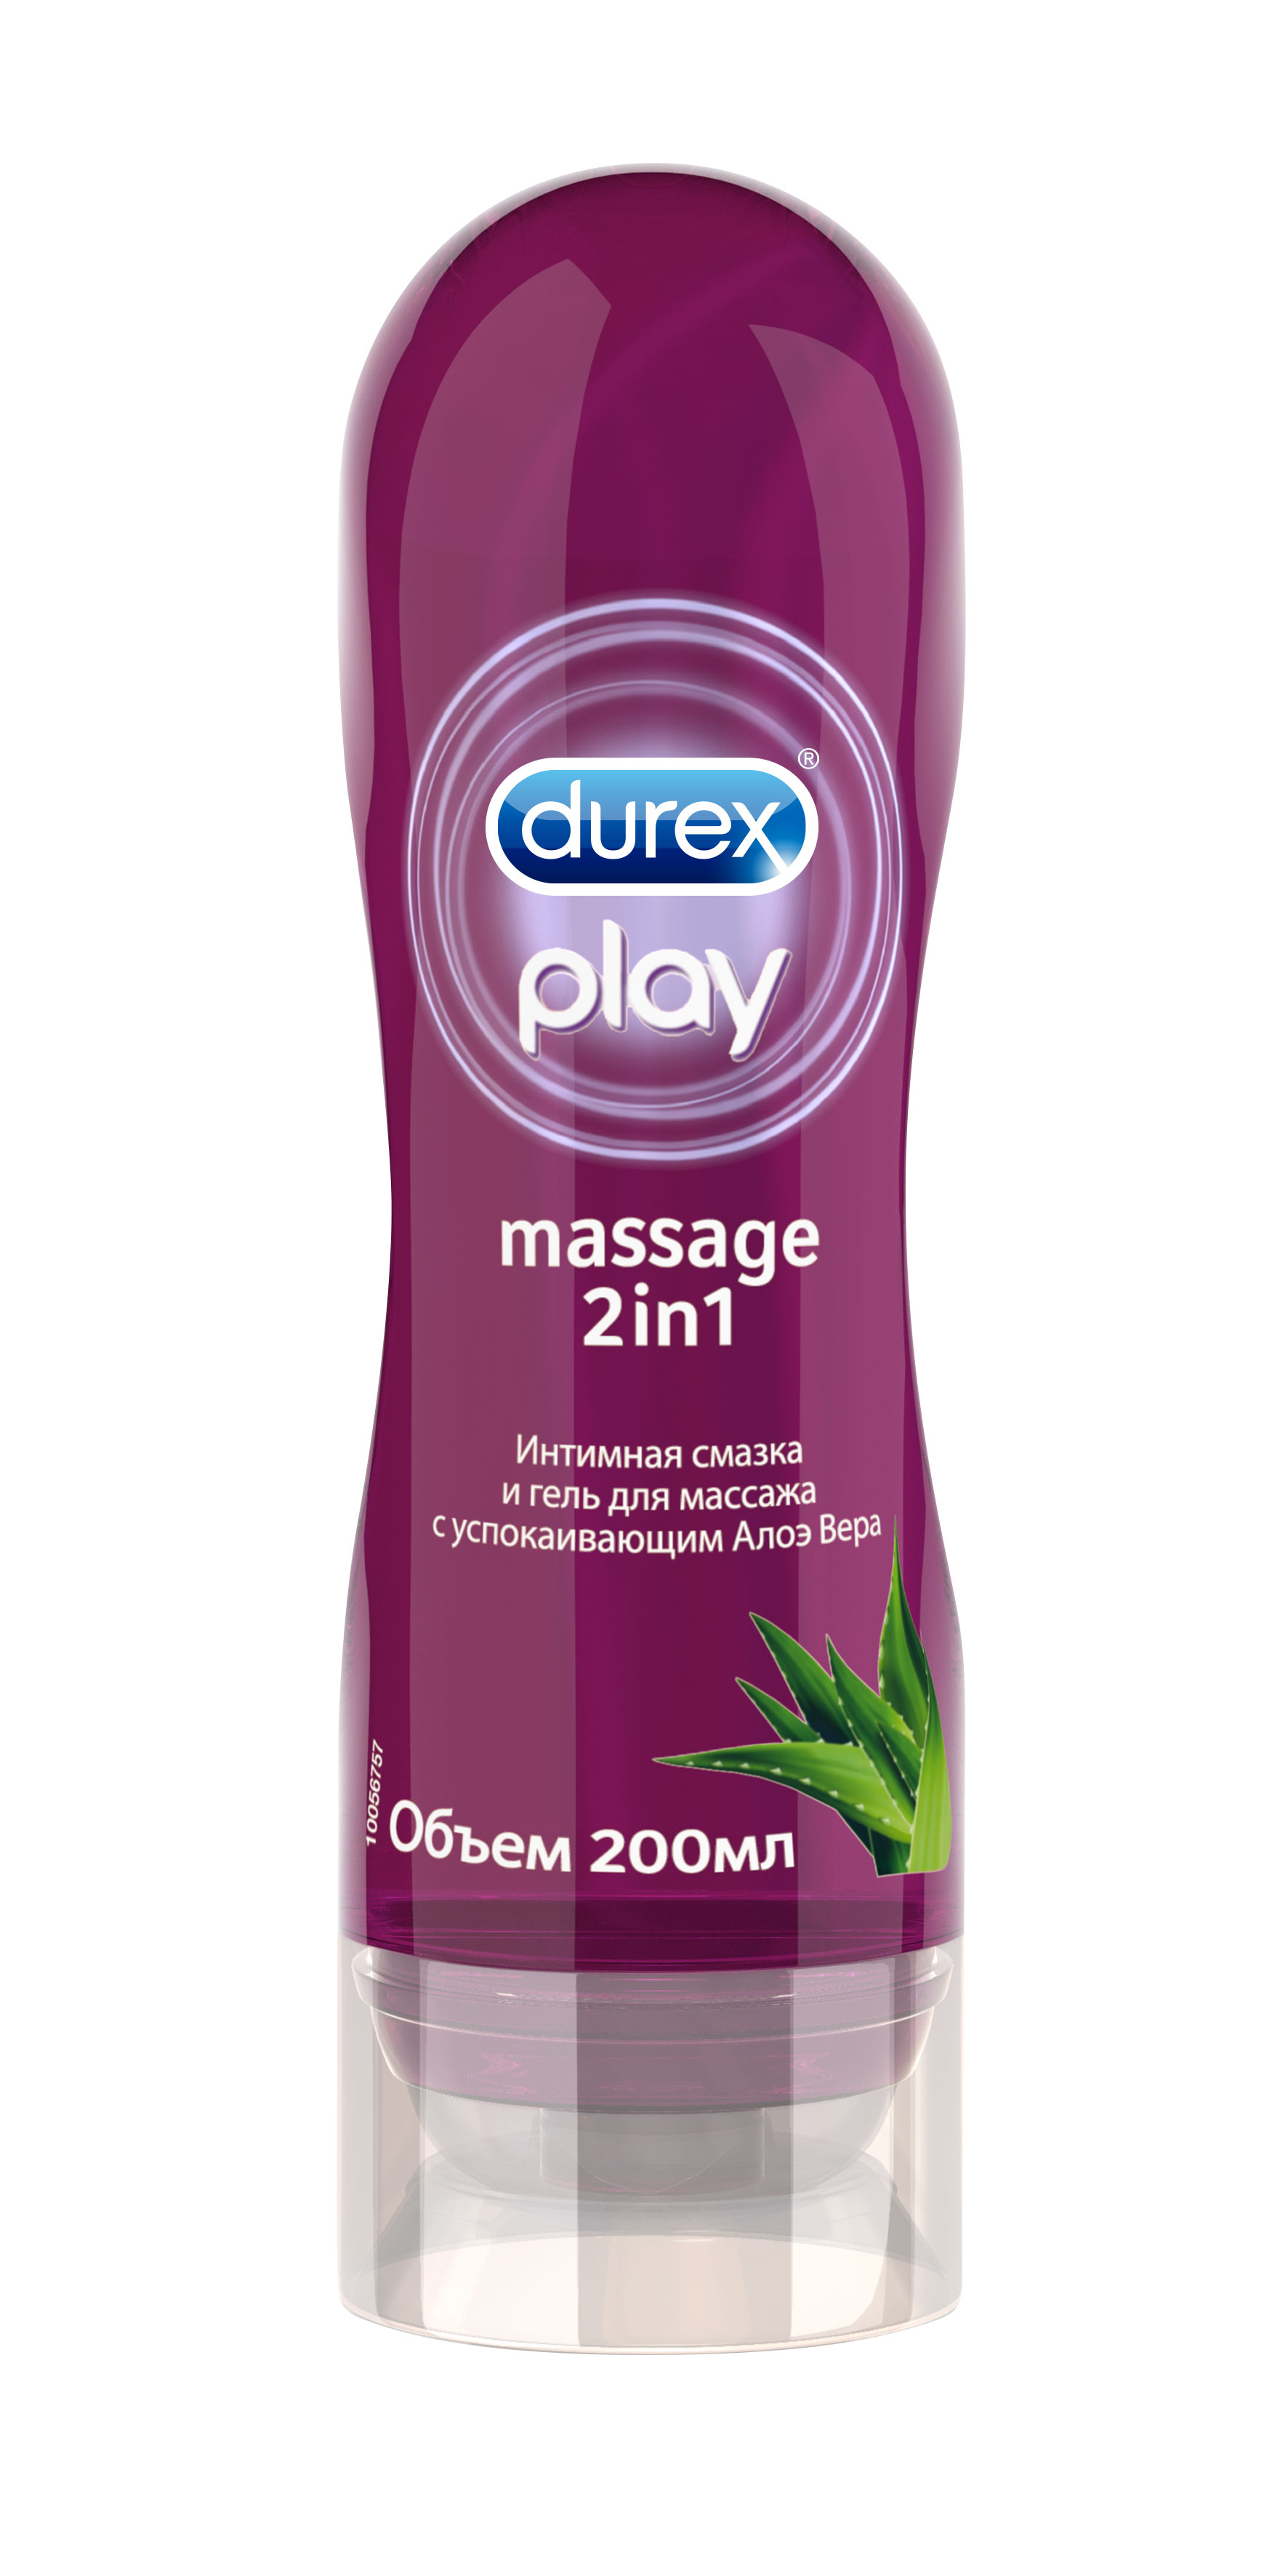 Массажные смазки. Гель-смазка Durex Play massage 2in1 sensual.